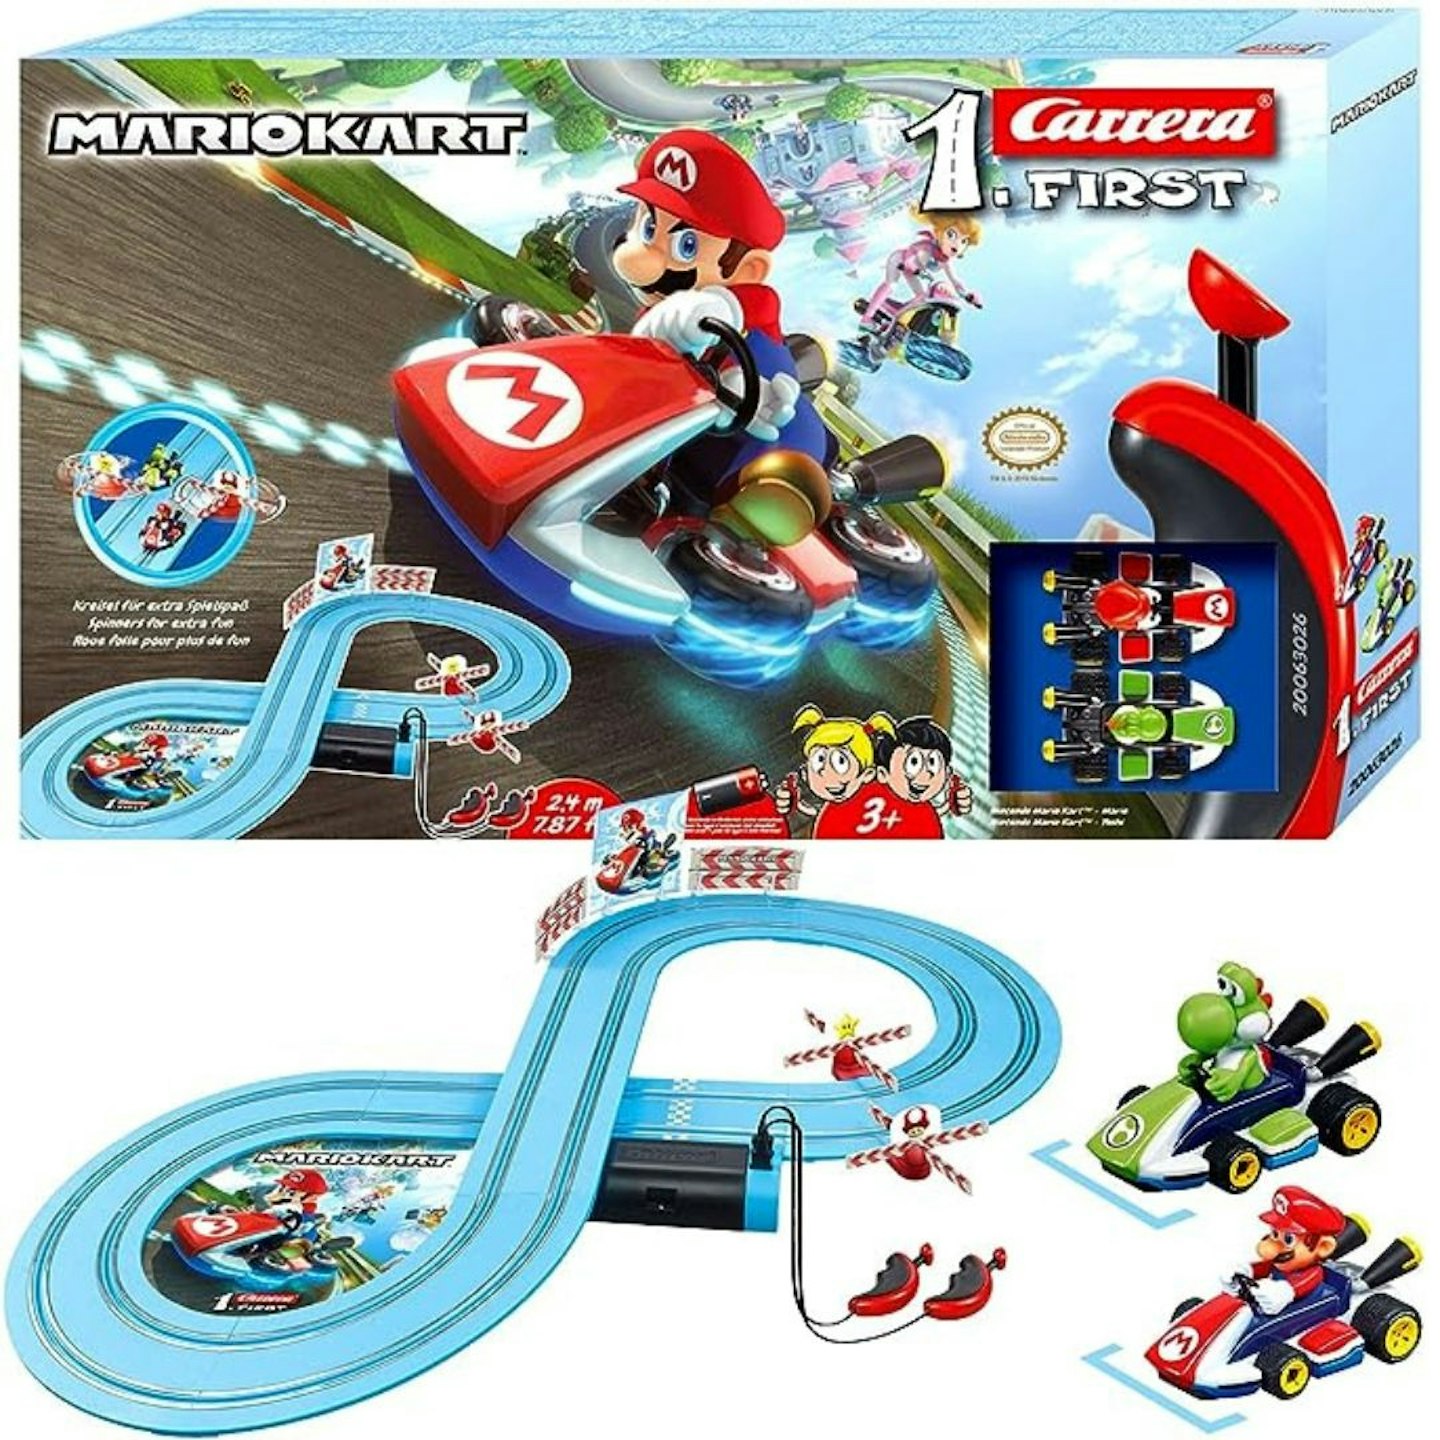 Best Retro Toys: Carrera First Nintendo Mario Kart™ Race Track Set